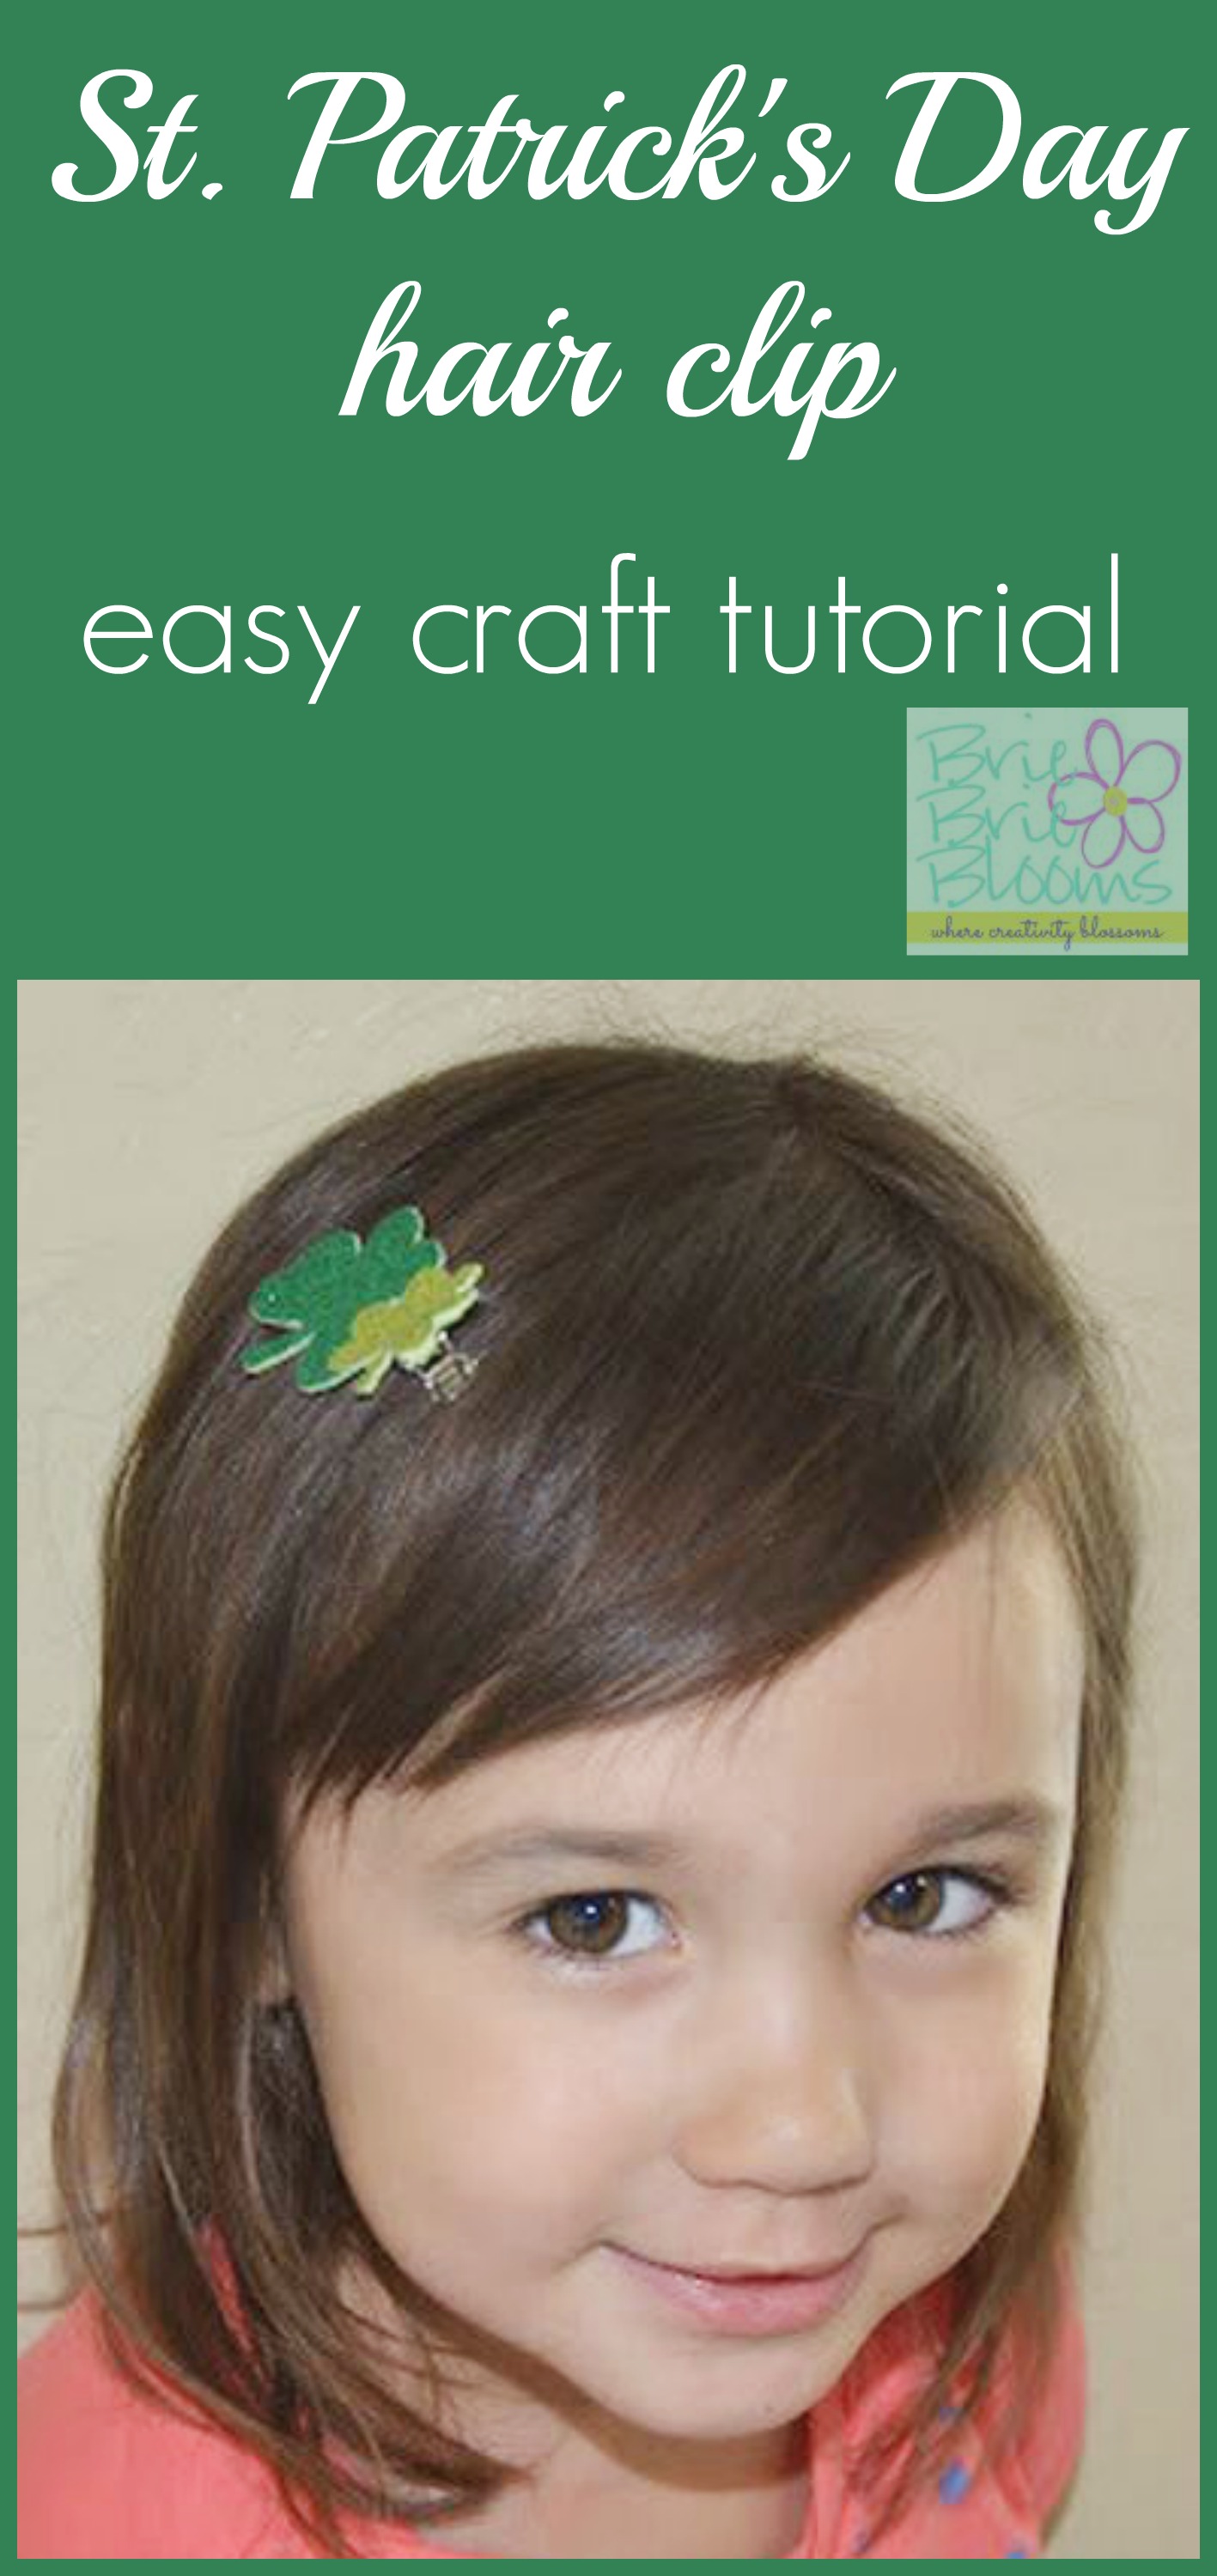 St. Patrick's Day hair clip